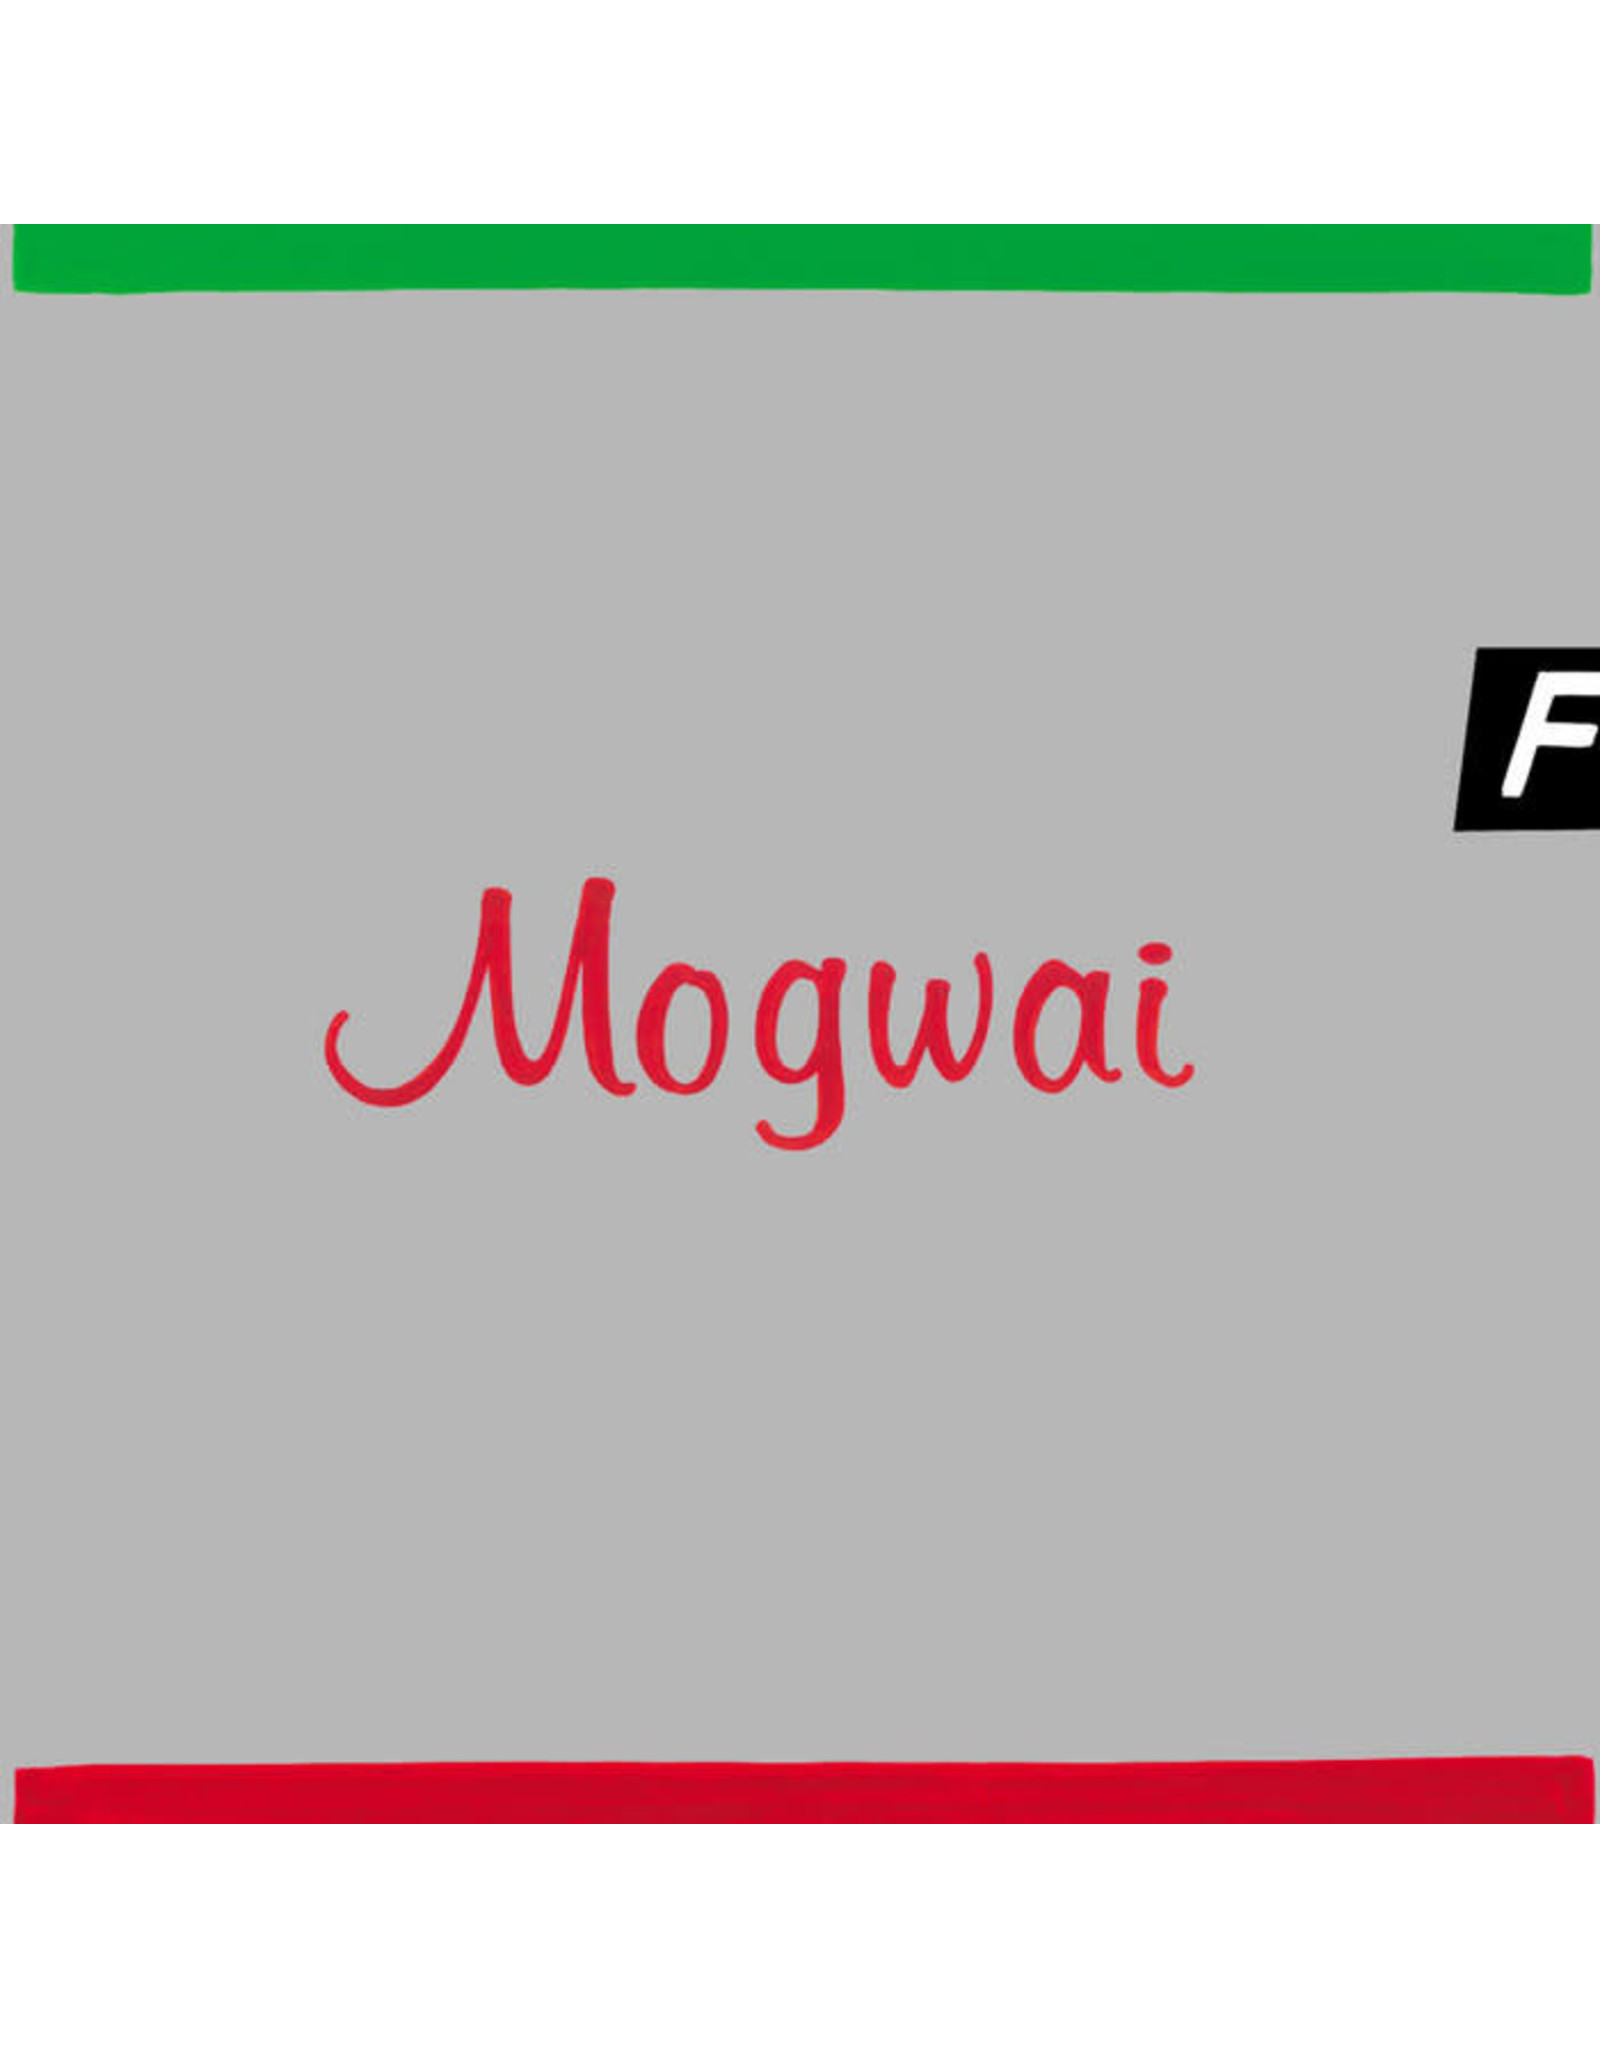 PIAS Mogwai: Happy Songs for Happy People LP